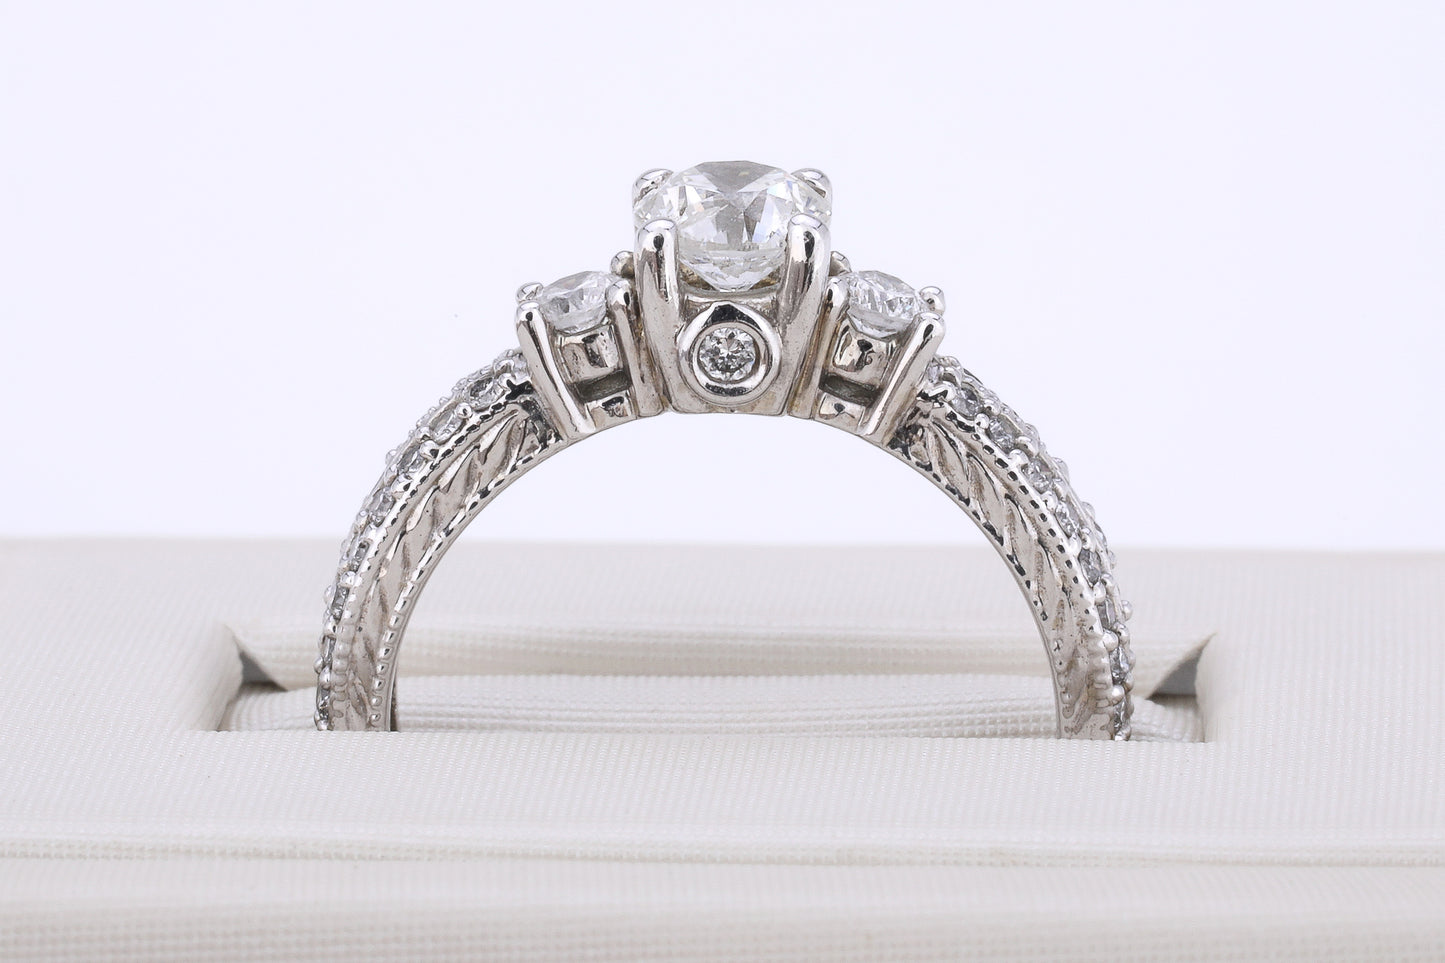 19k White Gold 0.94 ctw Diamond Engagement Ring